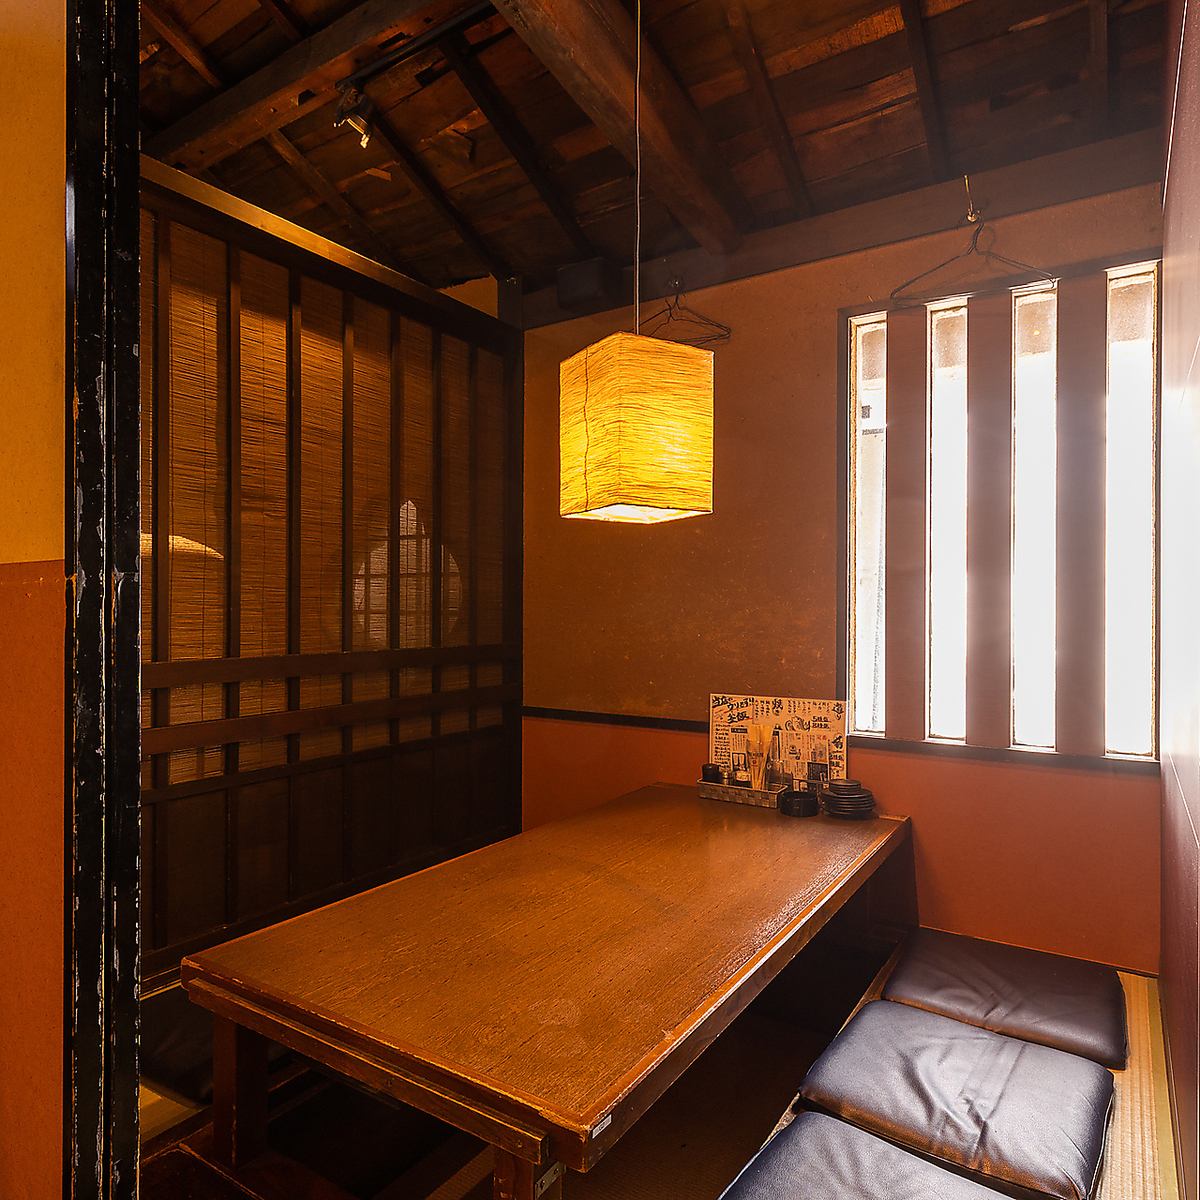 You can enjoy fresh sashimi and kamameshi dishes in a calm space.